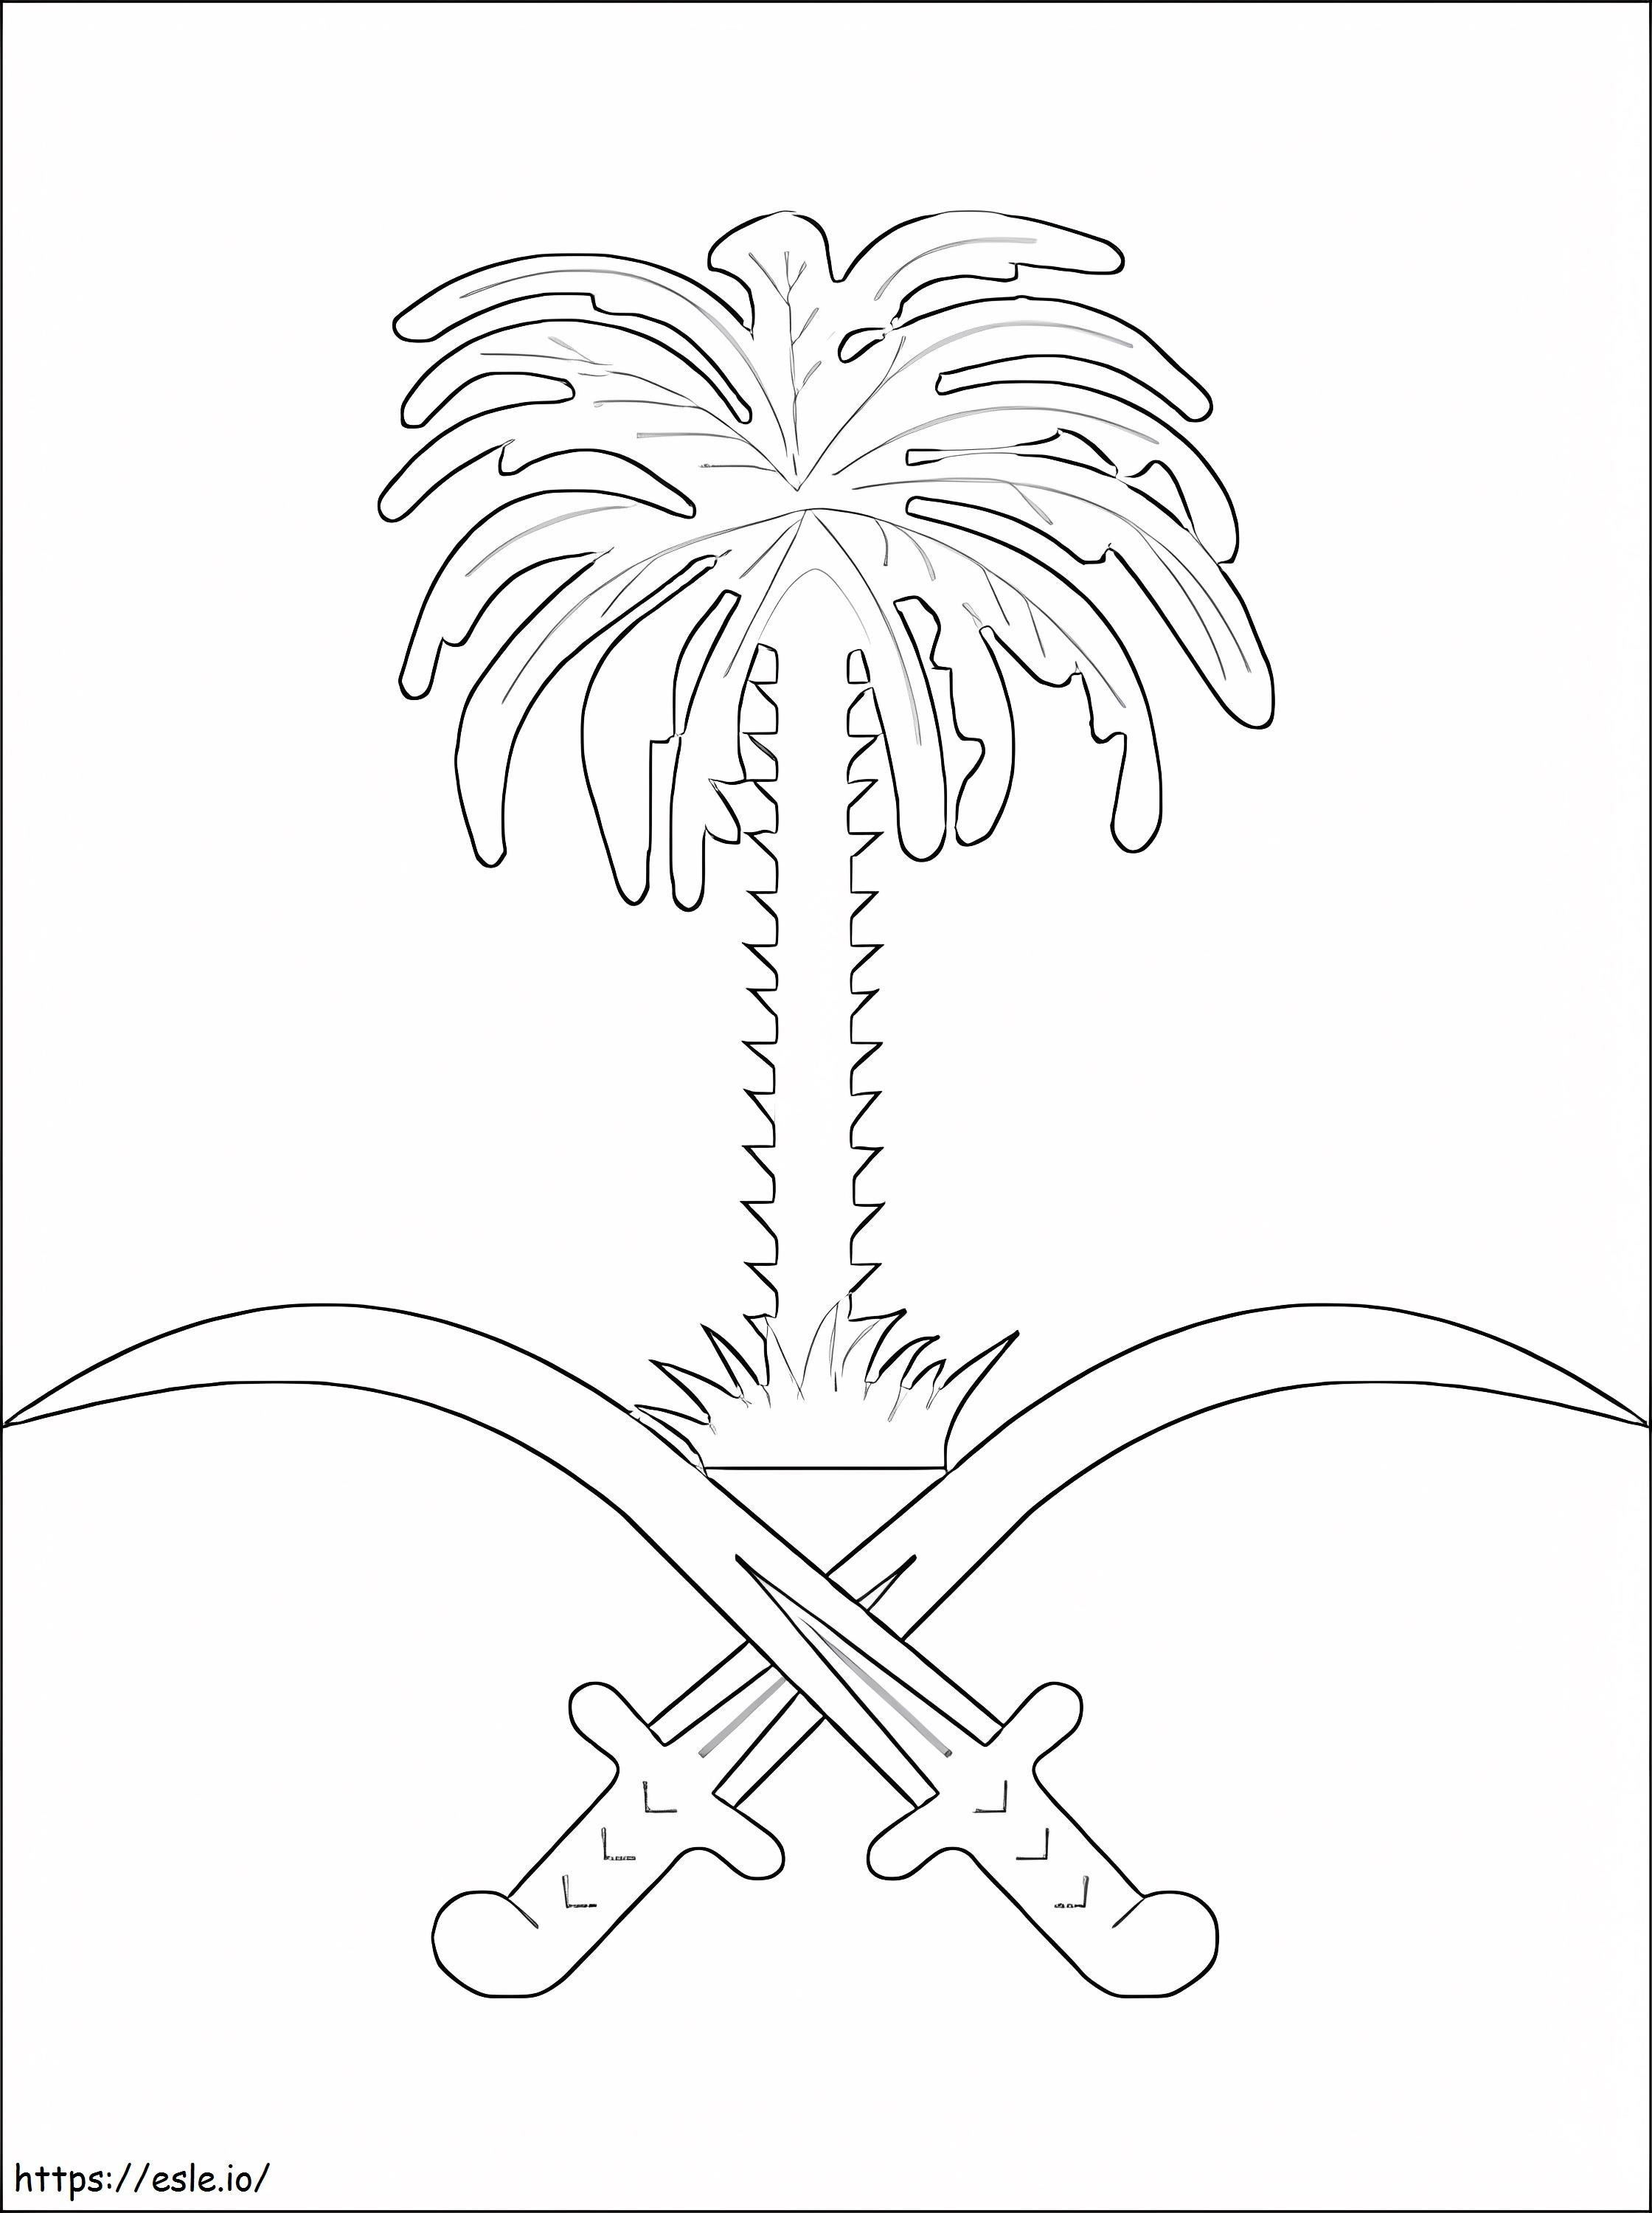 Escudo de Armas de Arabia Saudita para colorear